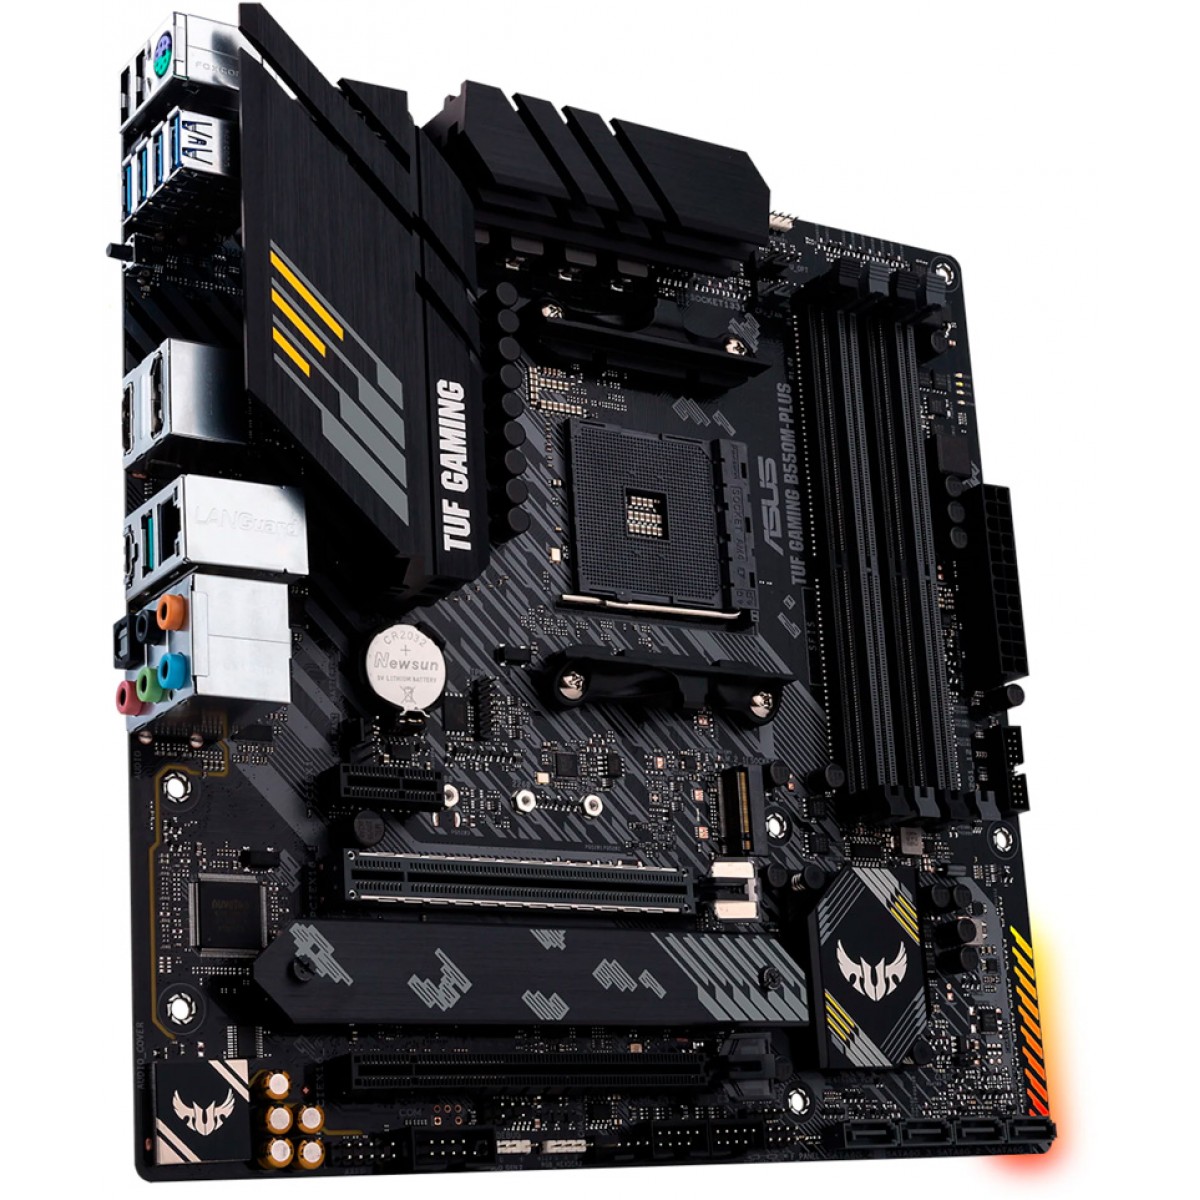 Placa Mãe Asus TUF Gaming B550M-Plus, Chipset B550, AMD AM4, mATX, DDR4, 90MB14A0-C1BAY0